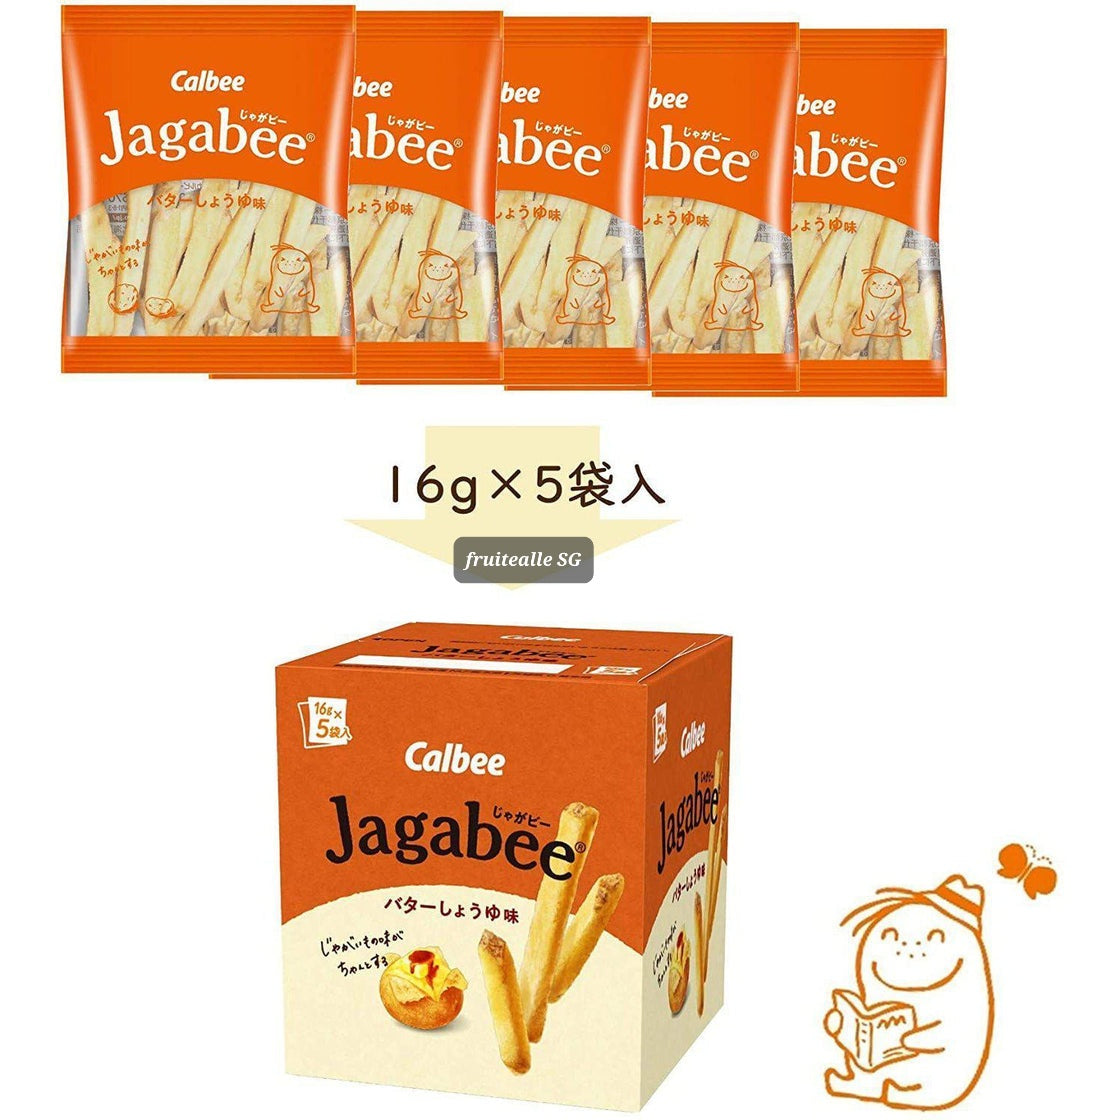 Japan Snack - Calbee Jagabee Potato Sticks Snack Happy